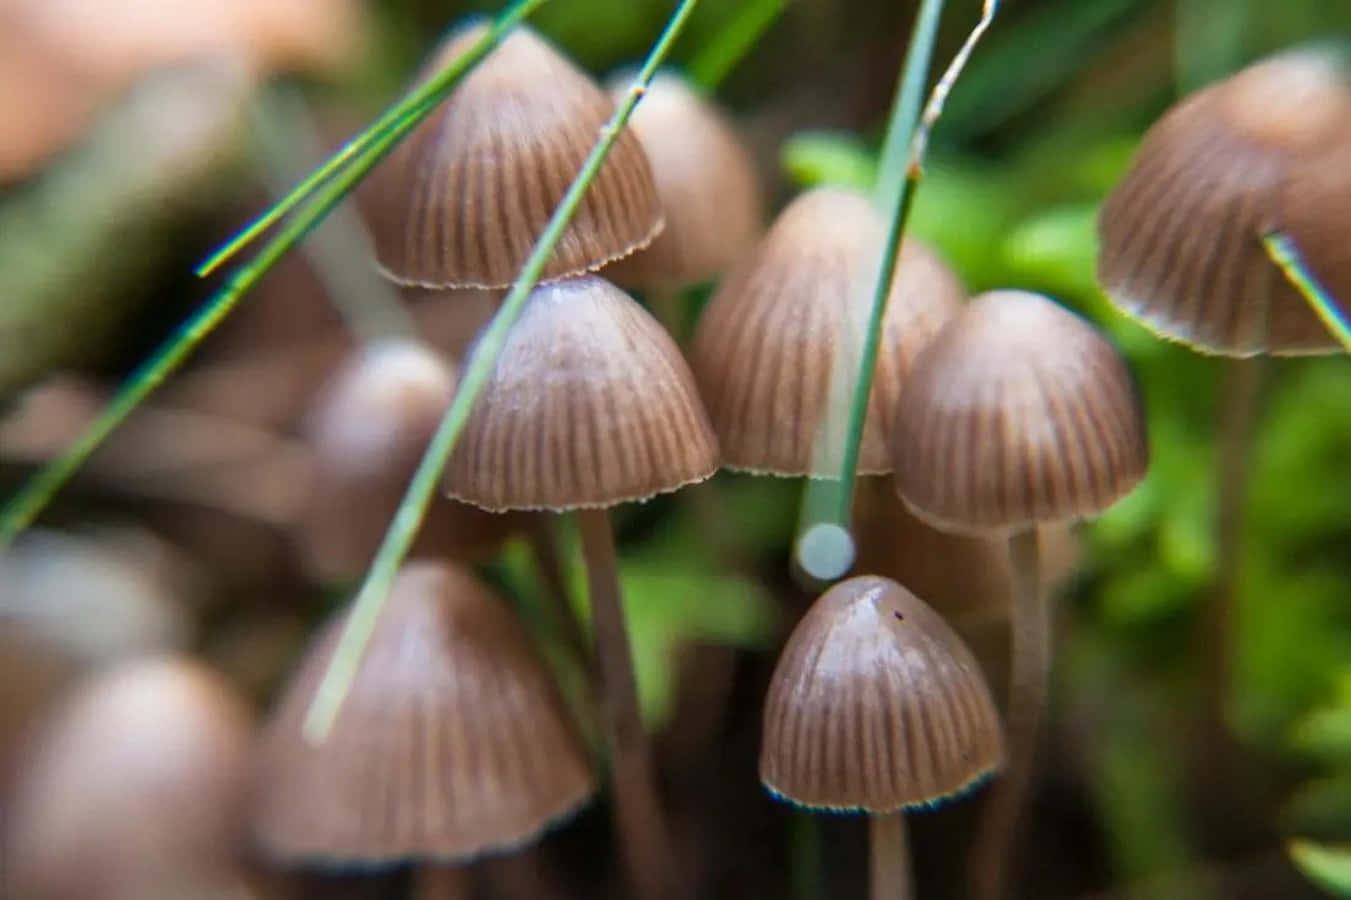 Go on an adventure with magic mushrooms